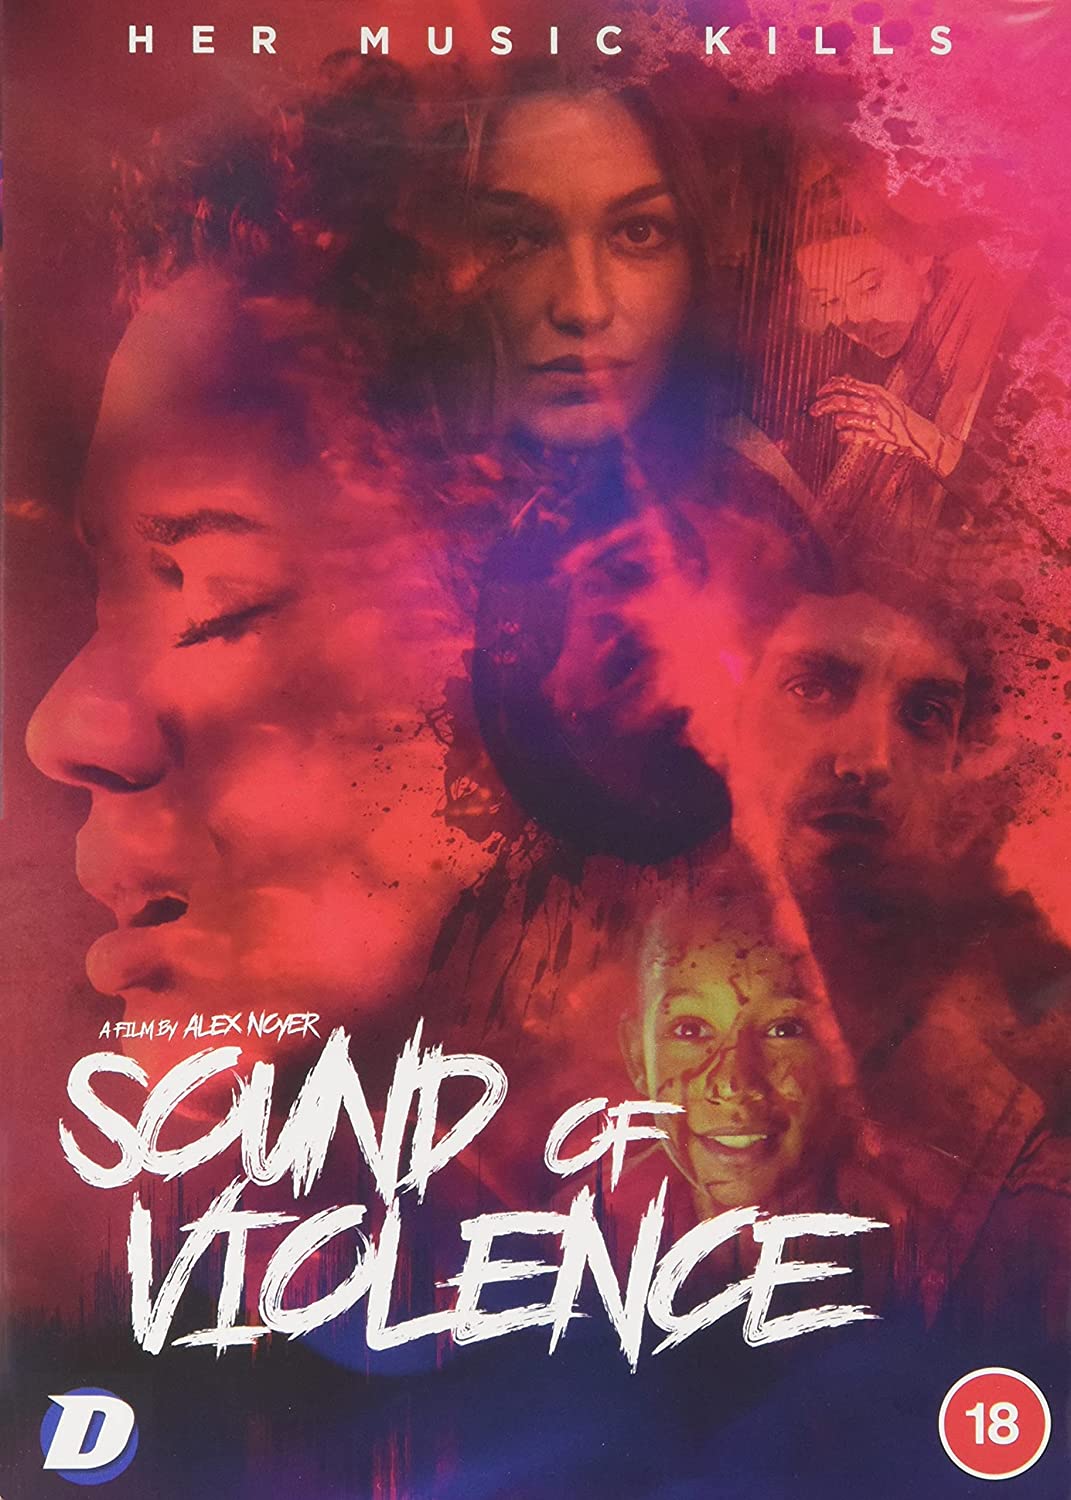 Sound of Violence [2021] - Horror [DVD]